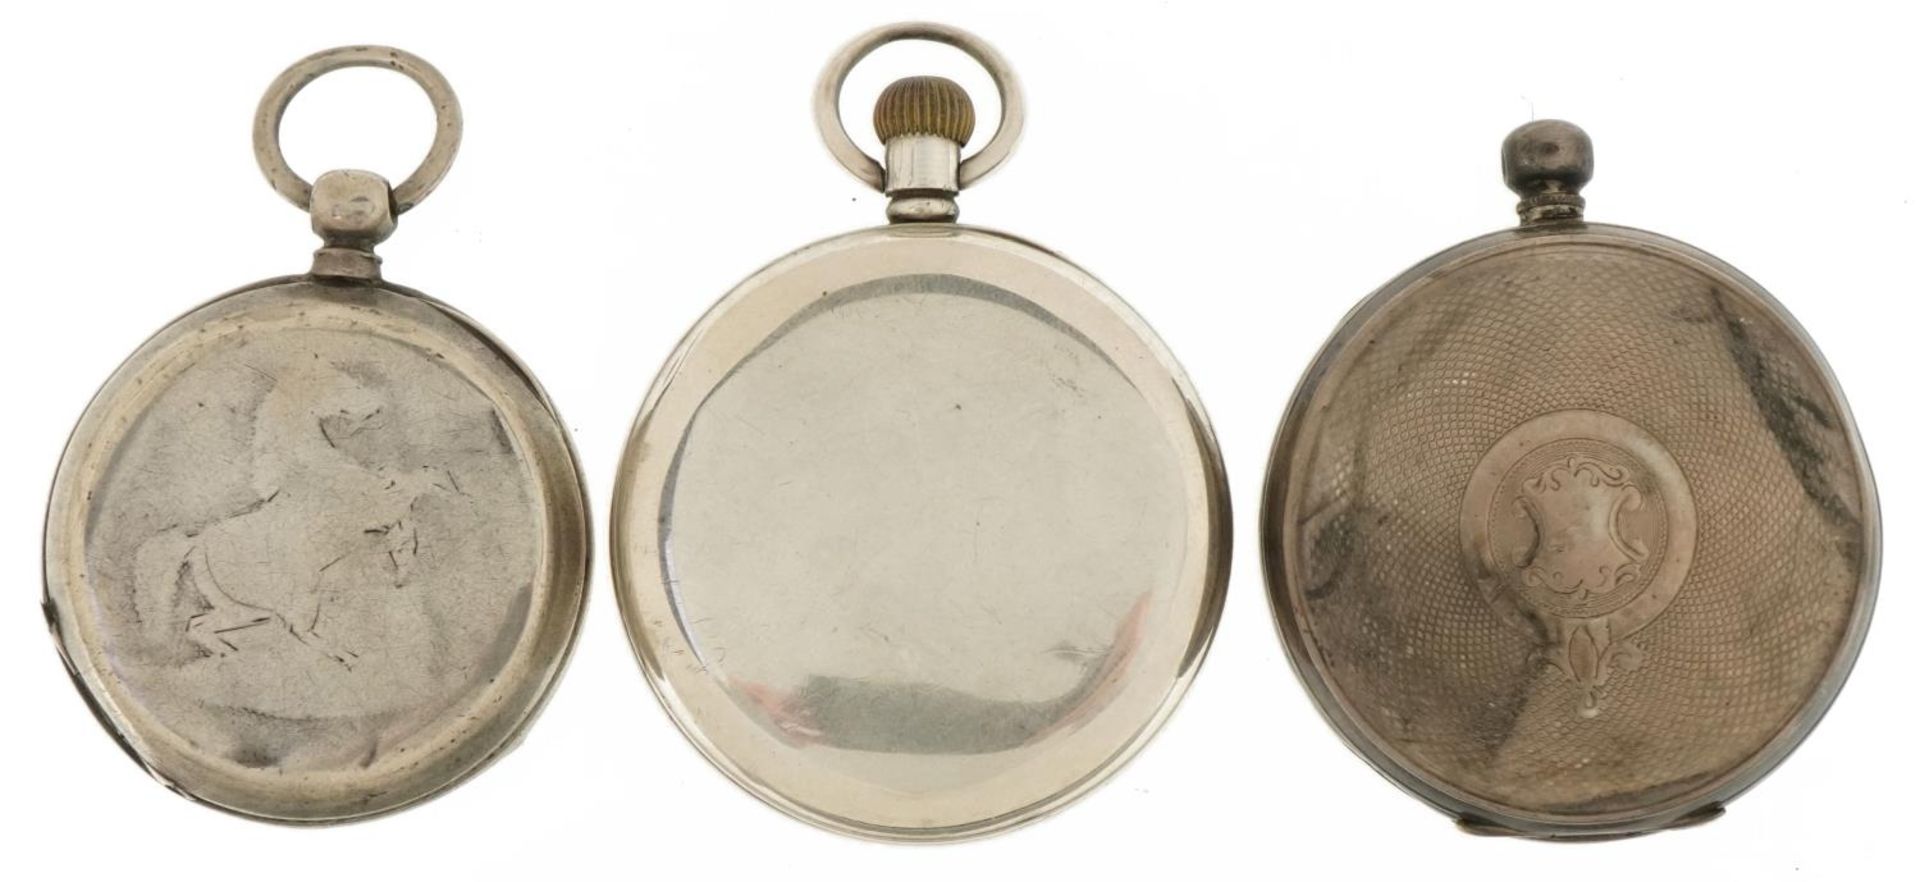 Two gentlemen's silver open face pocket watches and a ladies silver open face pocket watch including - Image 2 of 6